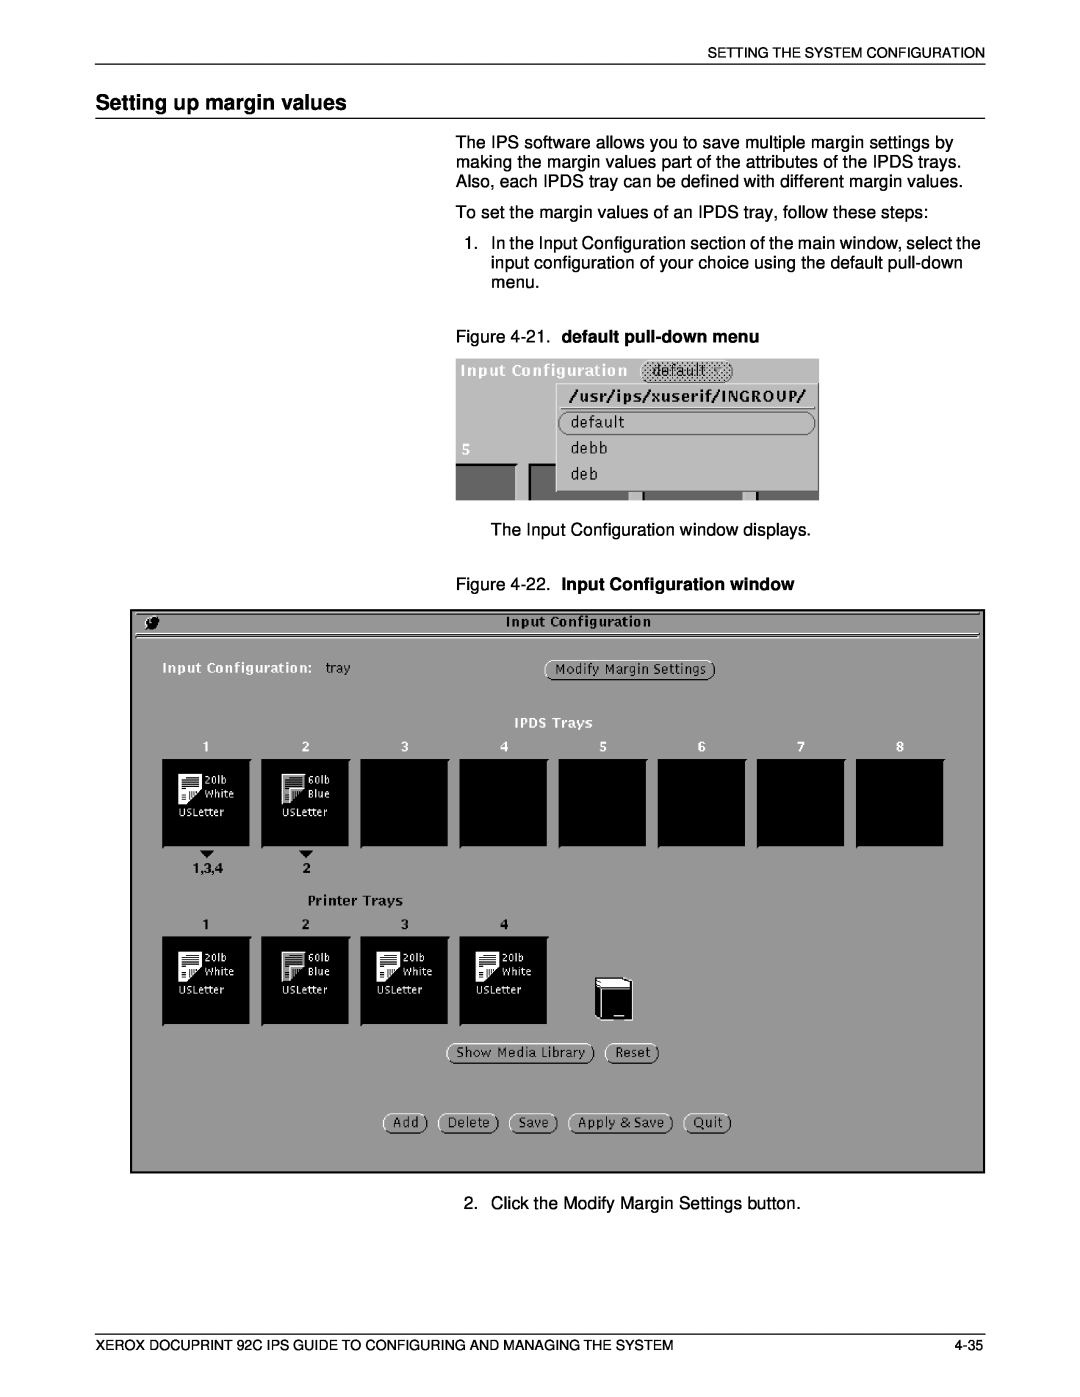 Xerox 92C IPS manual Setting up margin values, 21. default pull-down menu, 22. Input Configuration window 